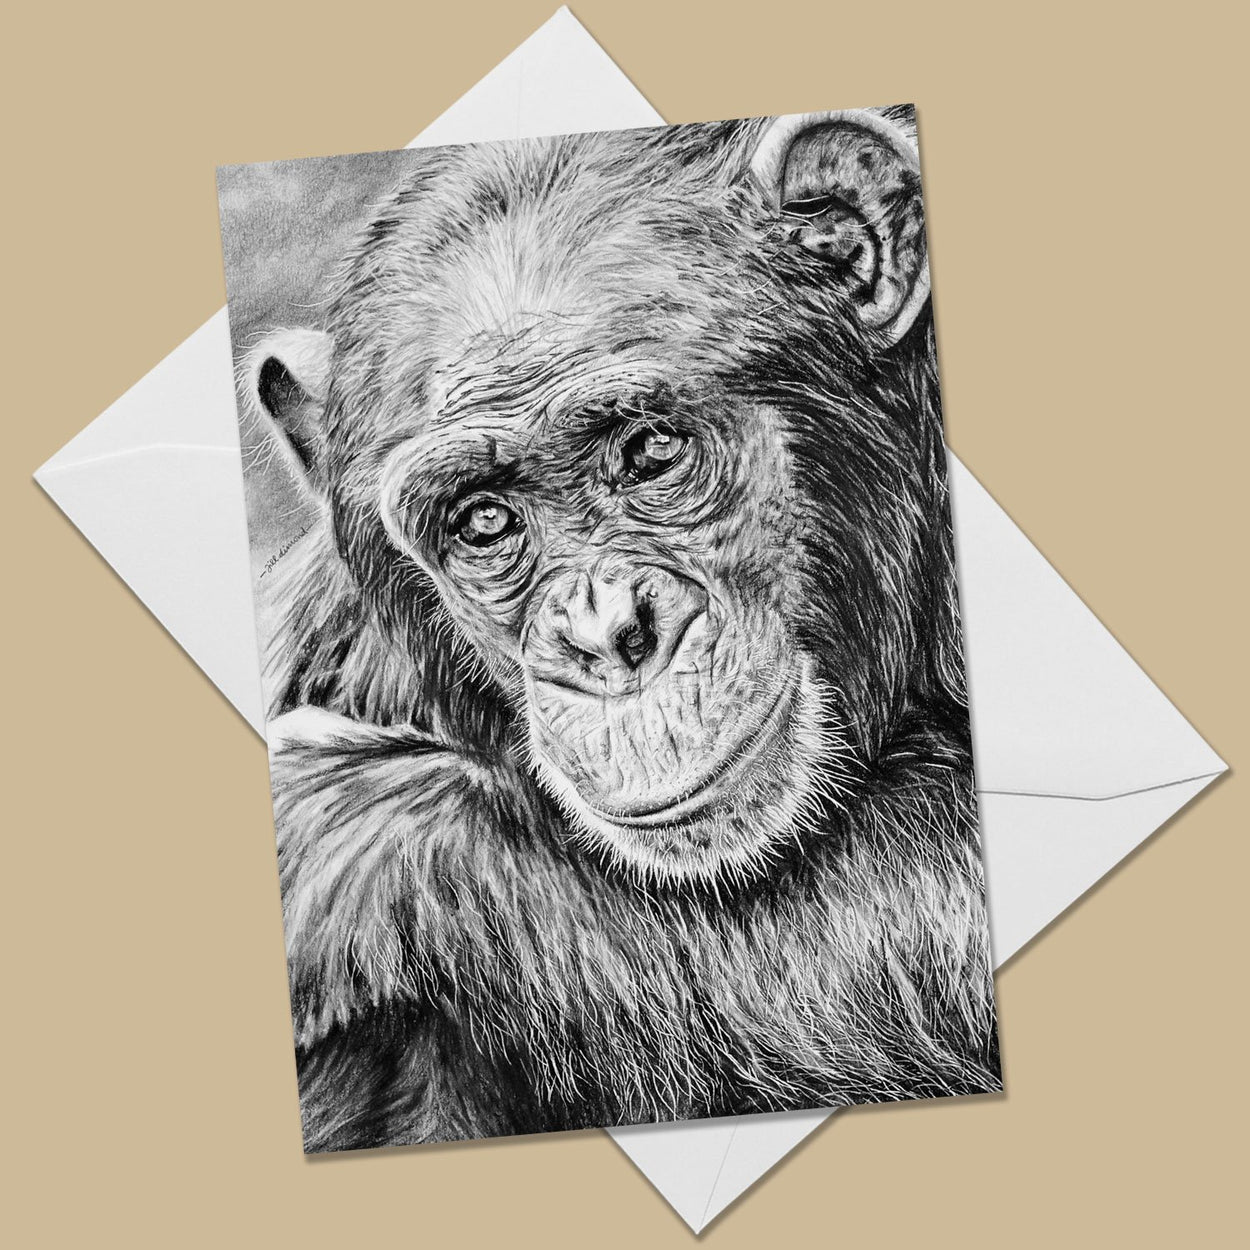 Chimpanzee Greeting Card - The Thriving Wild